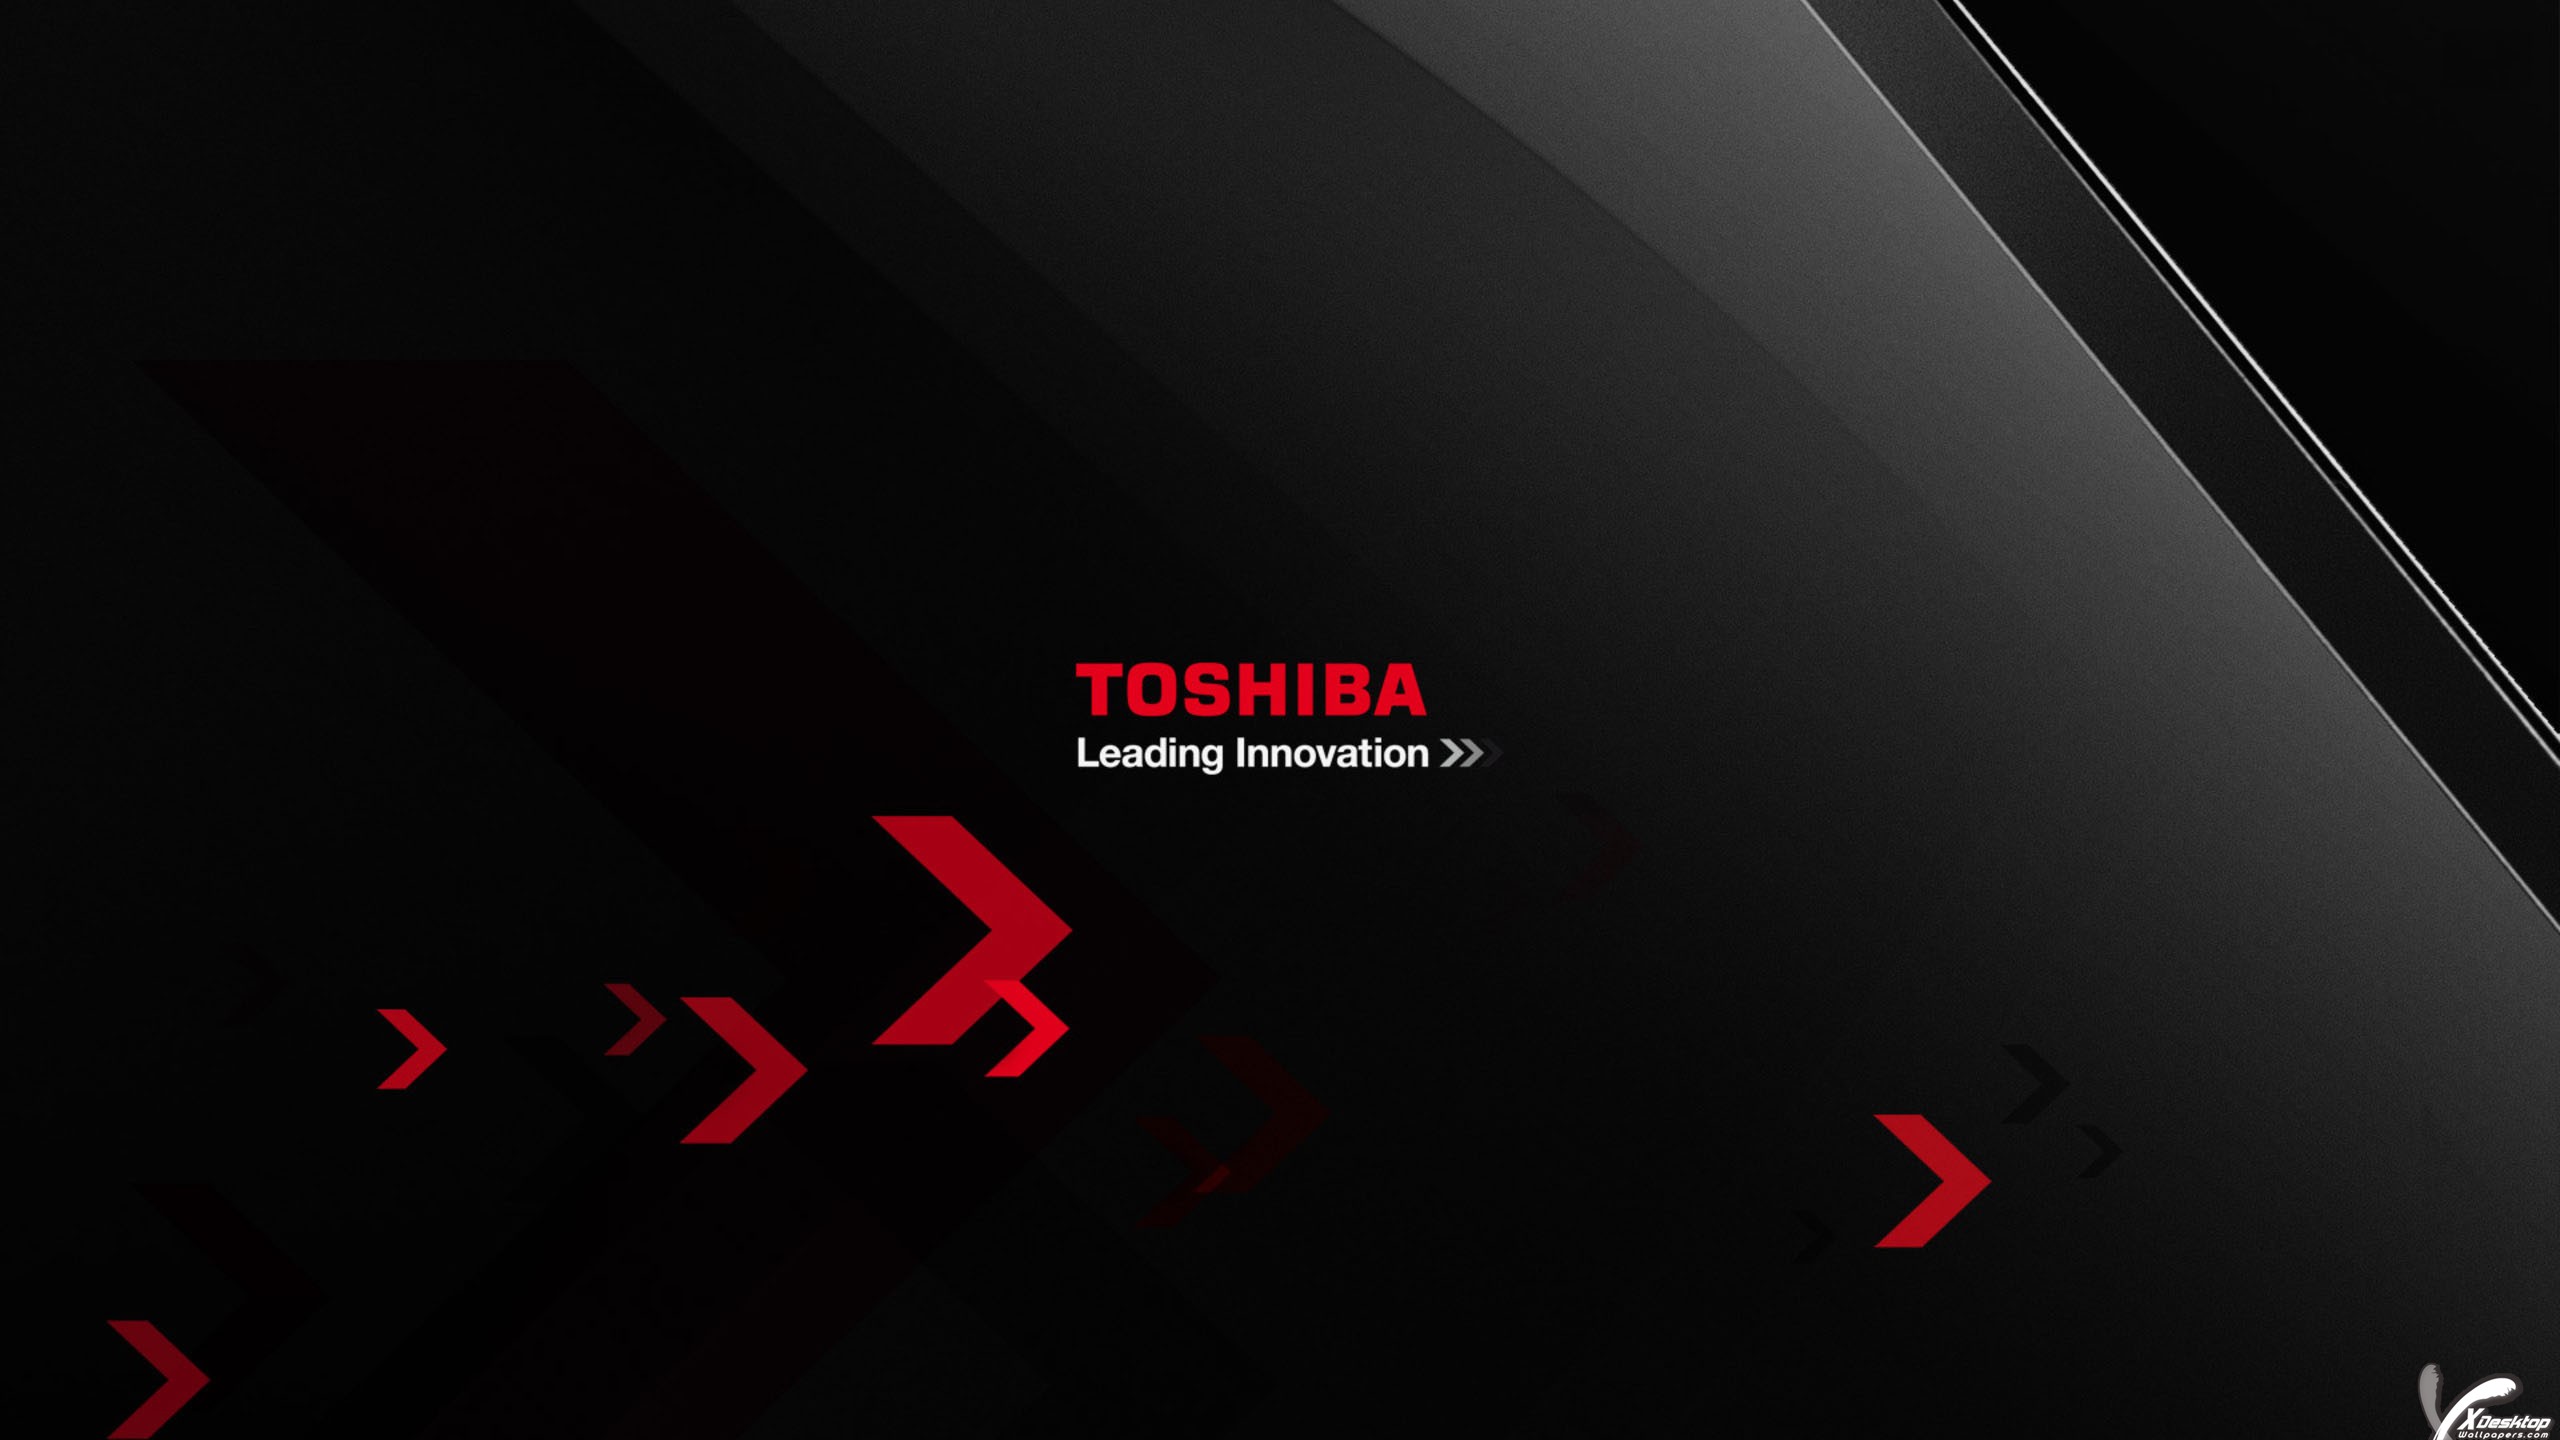 Logo On Black Backgroung Of Toshiba Leading Innovation Wallpaper 2560x1440